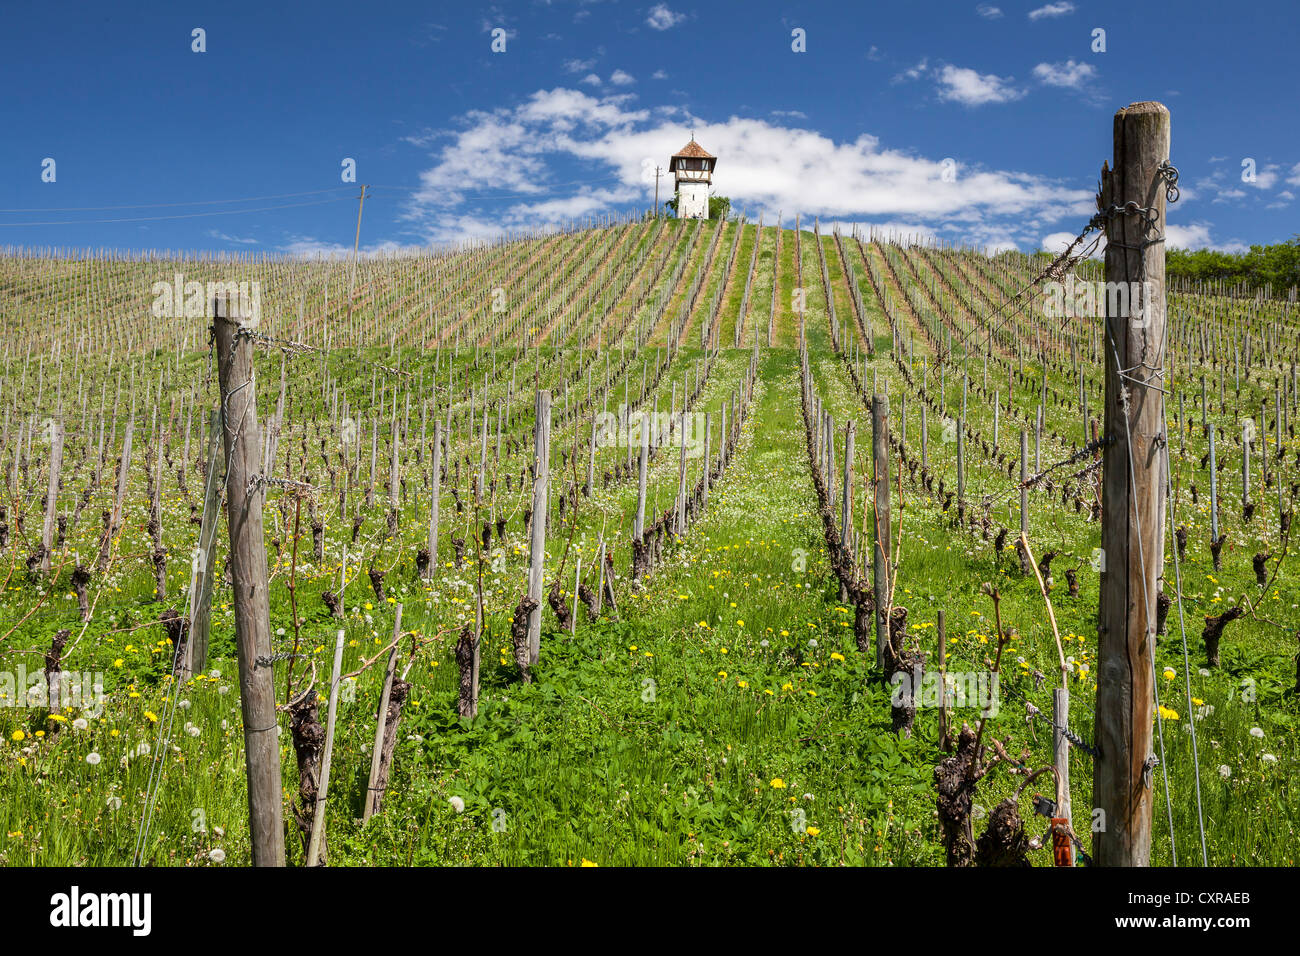 Tower on Lerchenberg hill in the vineyards near Meersburg, Baden-Wuerttemberg, Germany, Europe Stock Photo